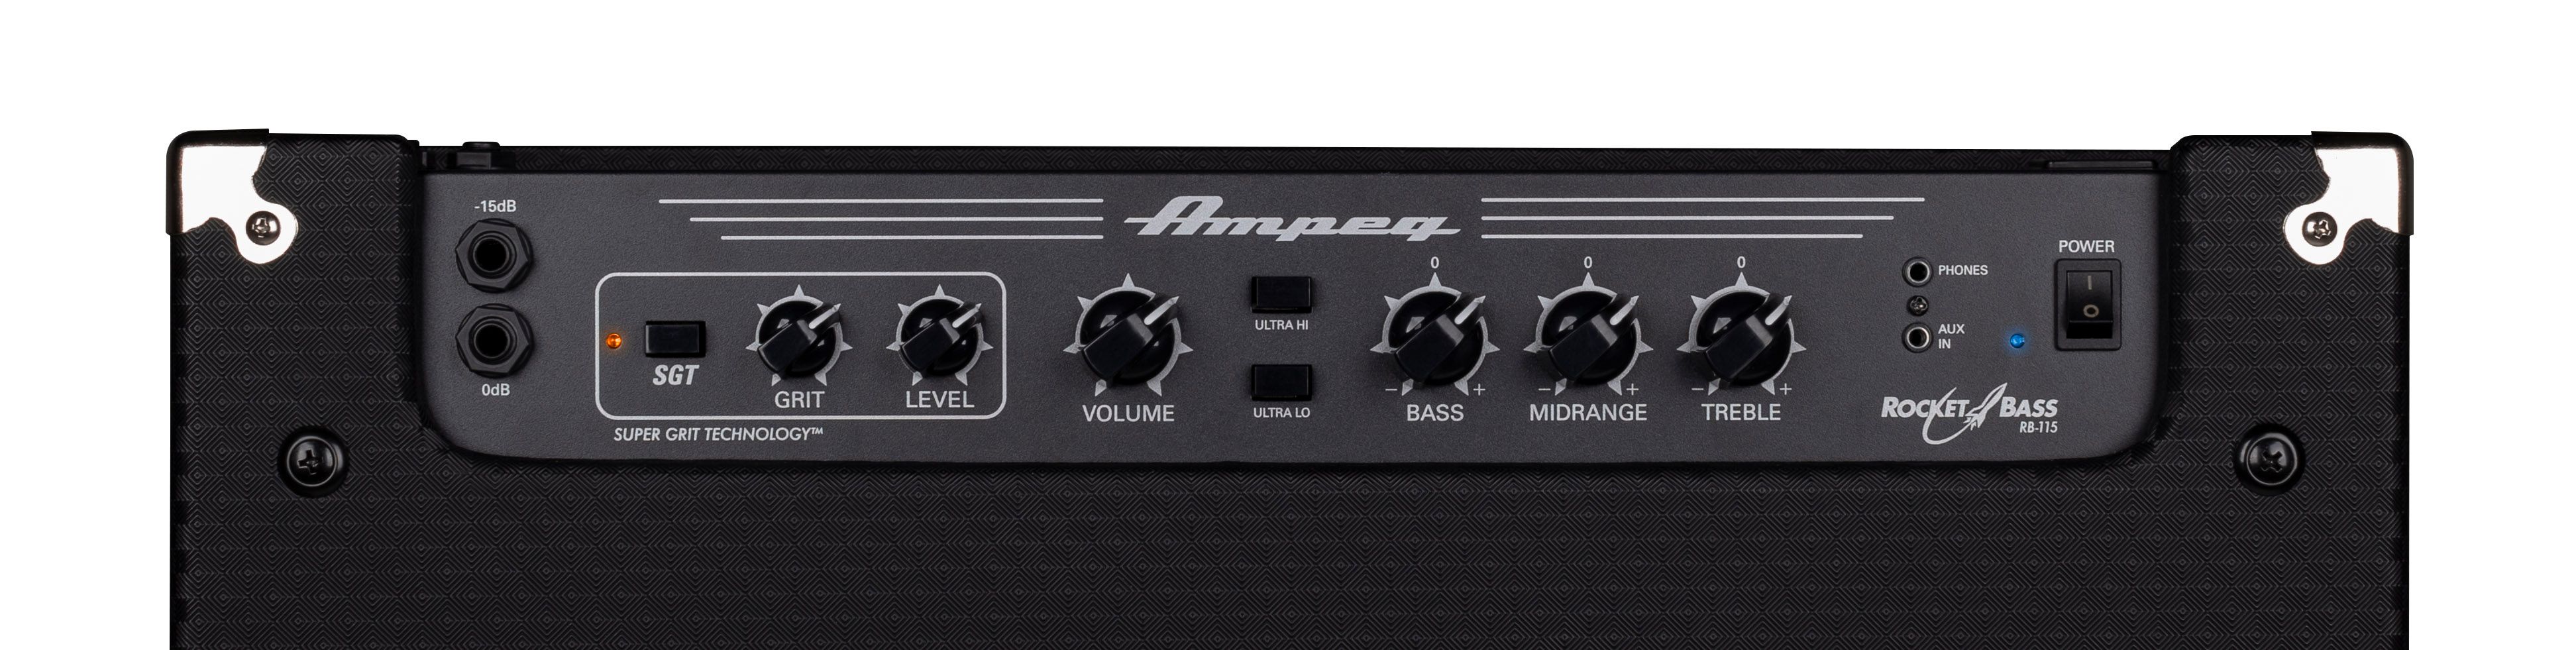 Ampeg Rocket Bass Combo 200w 1x15 - Combo amplificador para bajo - Variation 2